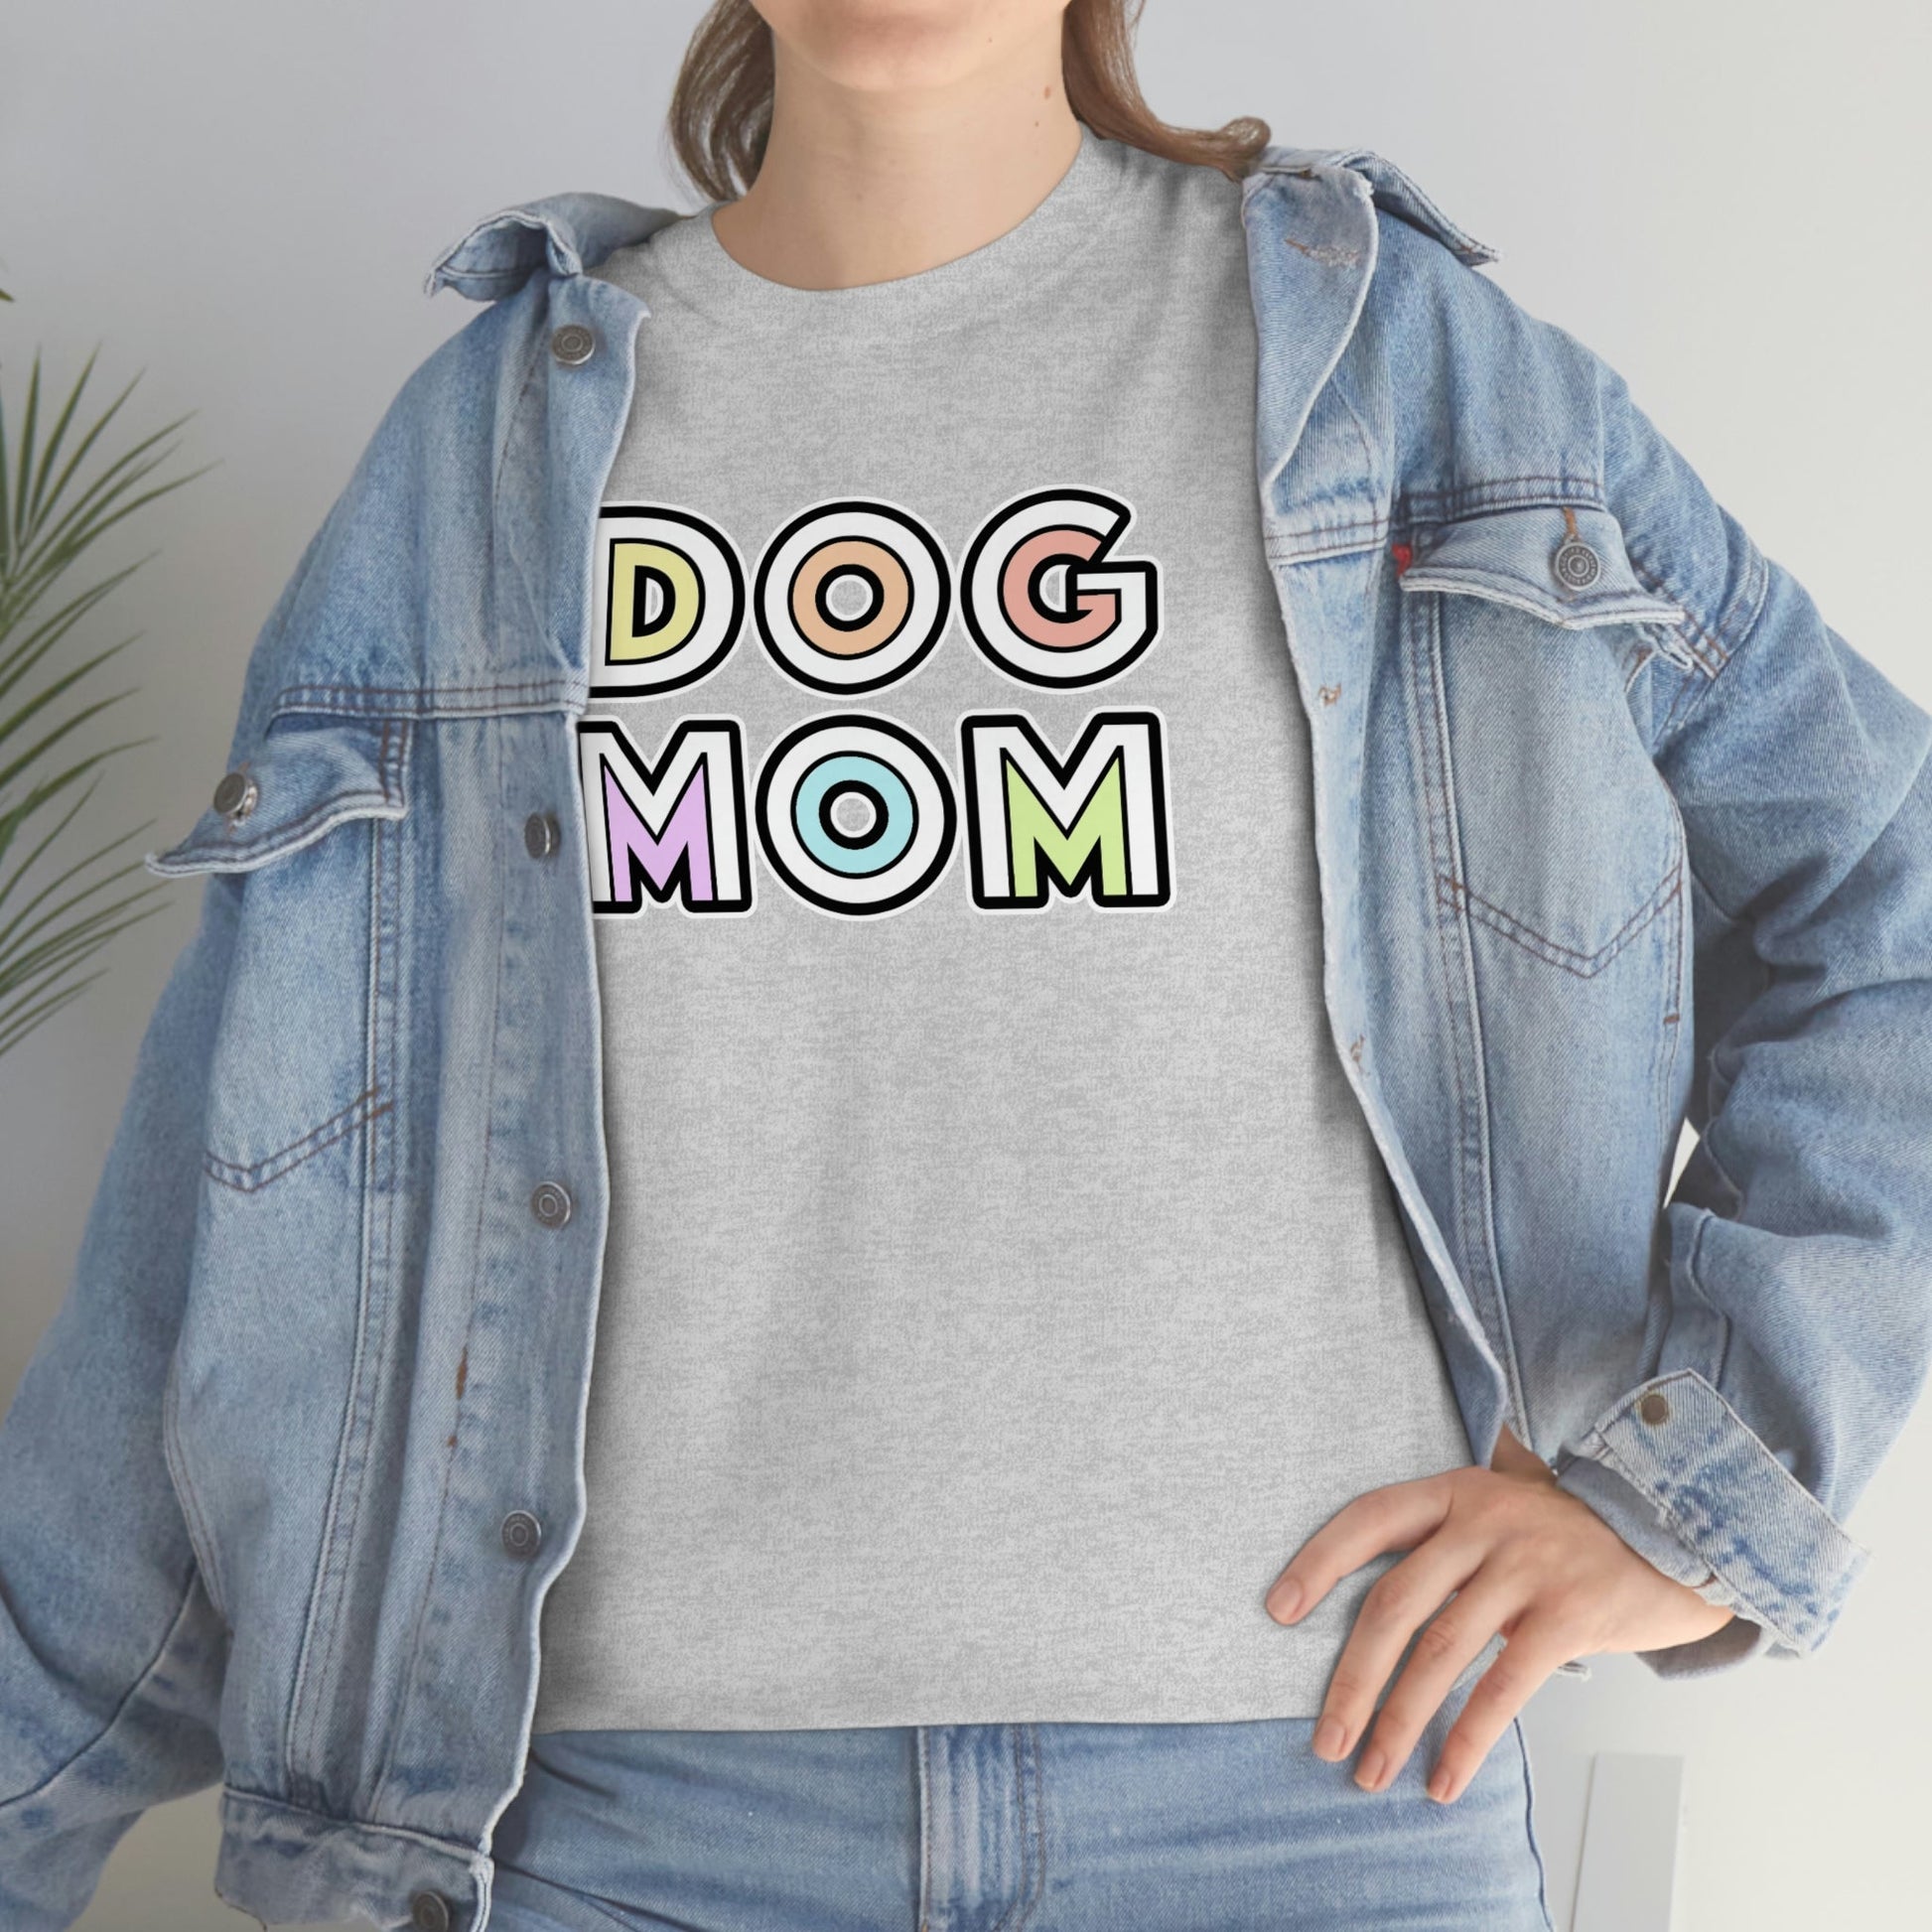 Dog Mom Retro | Text Tees - Detezi Designs-13578035109394343270